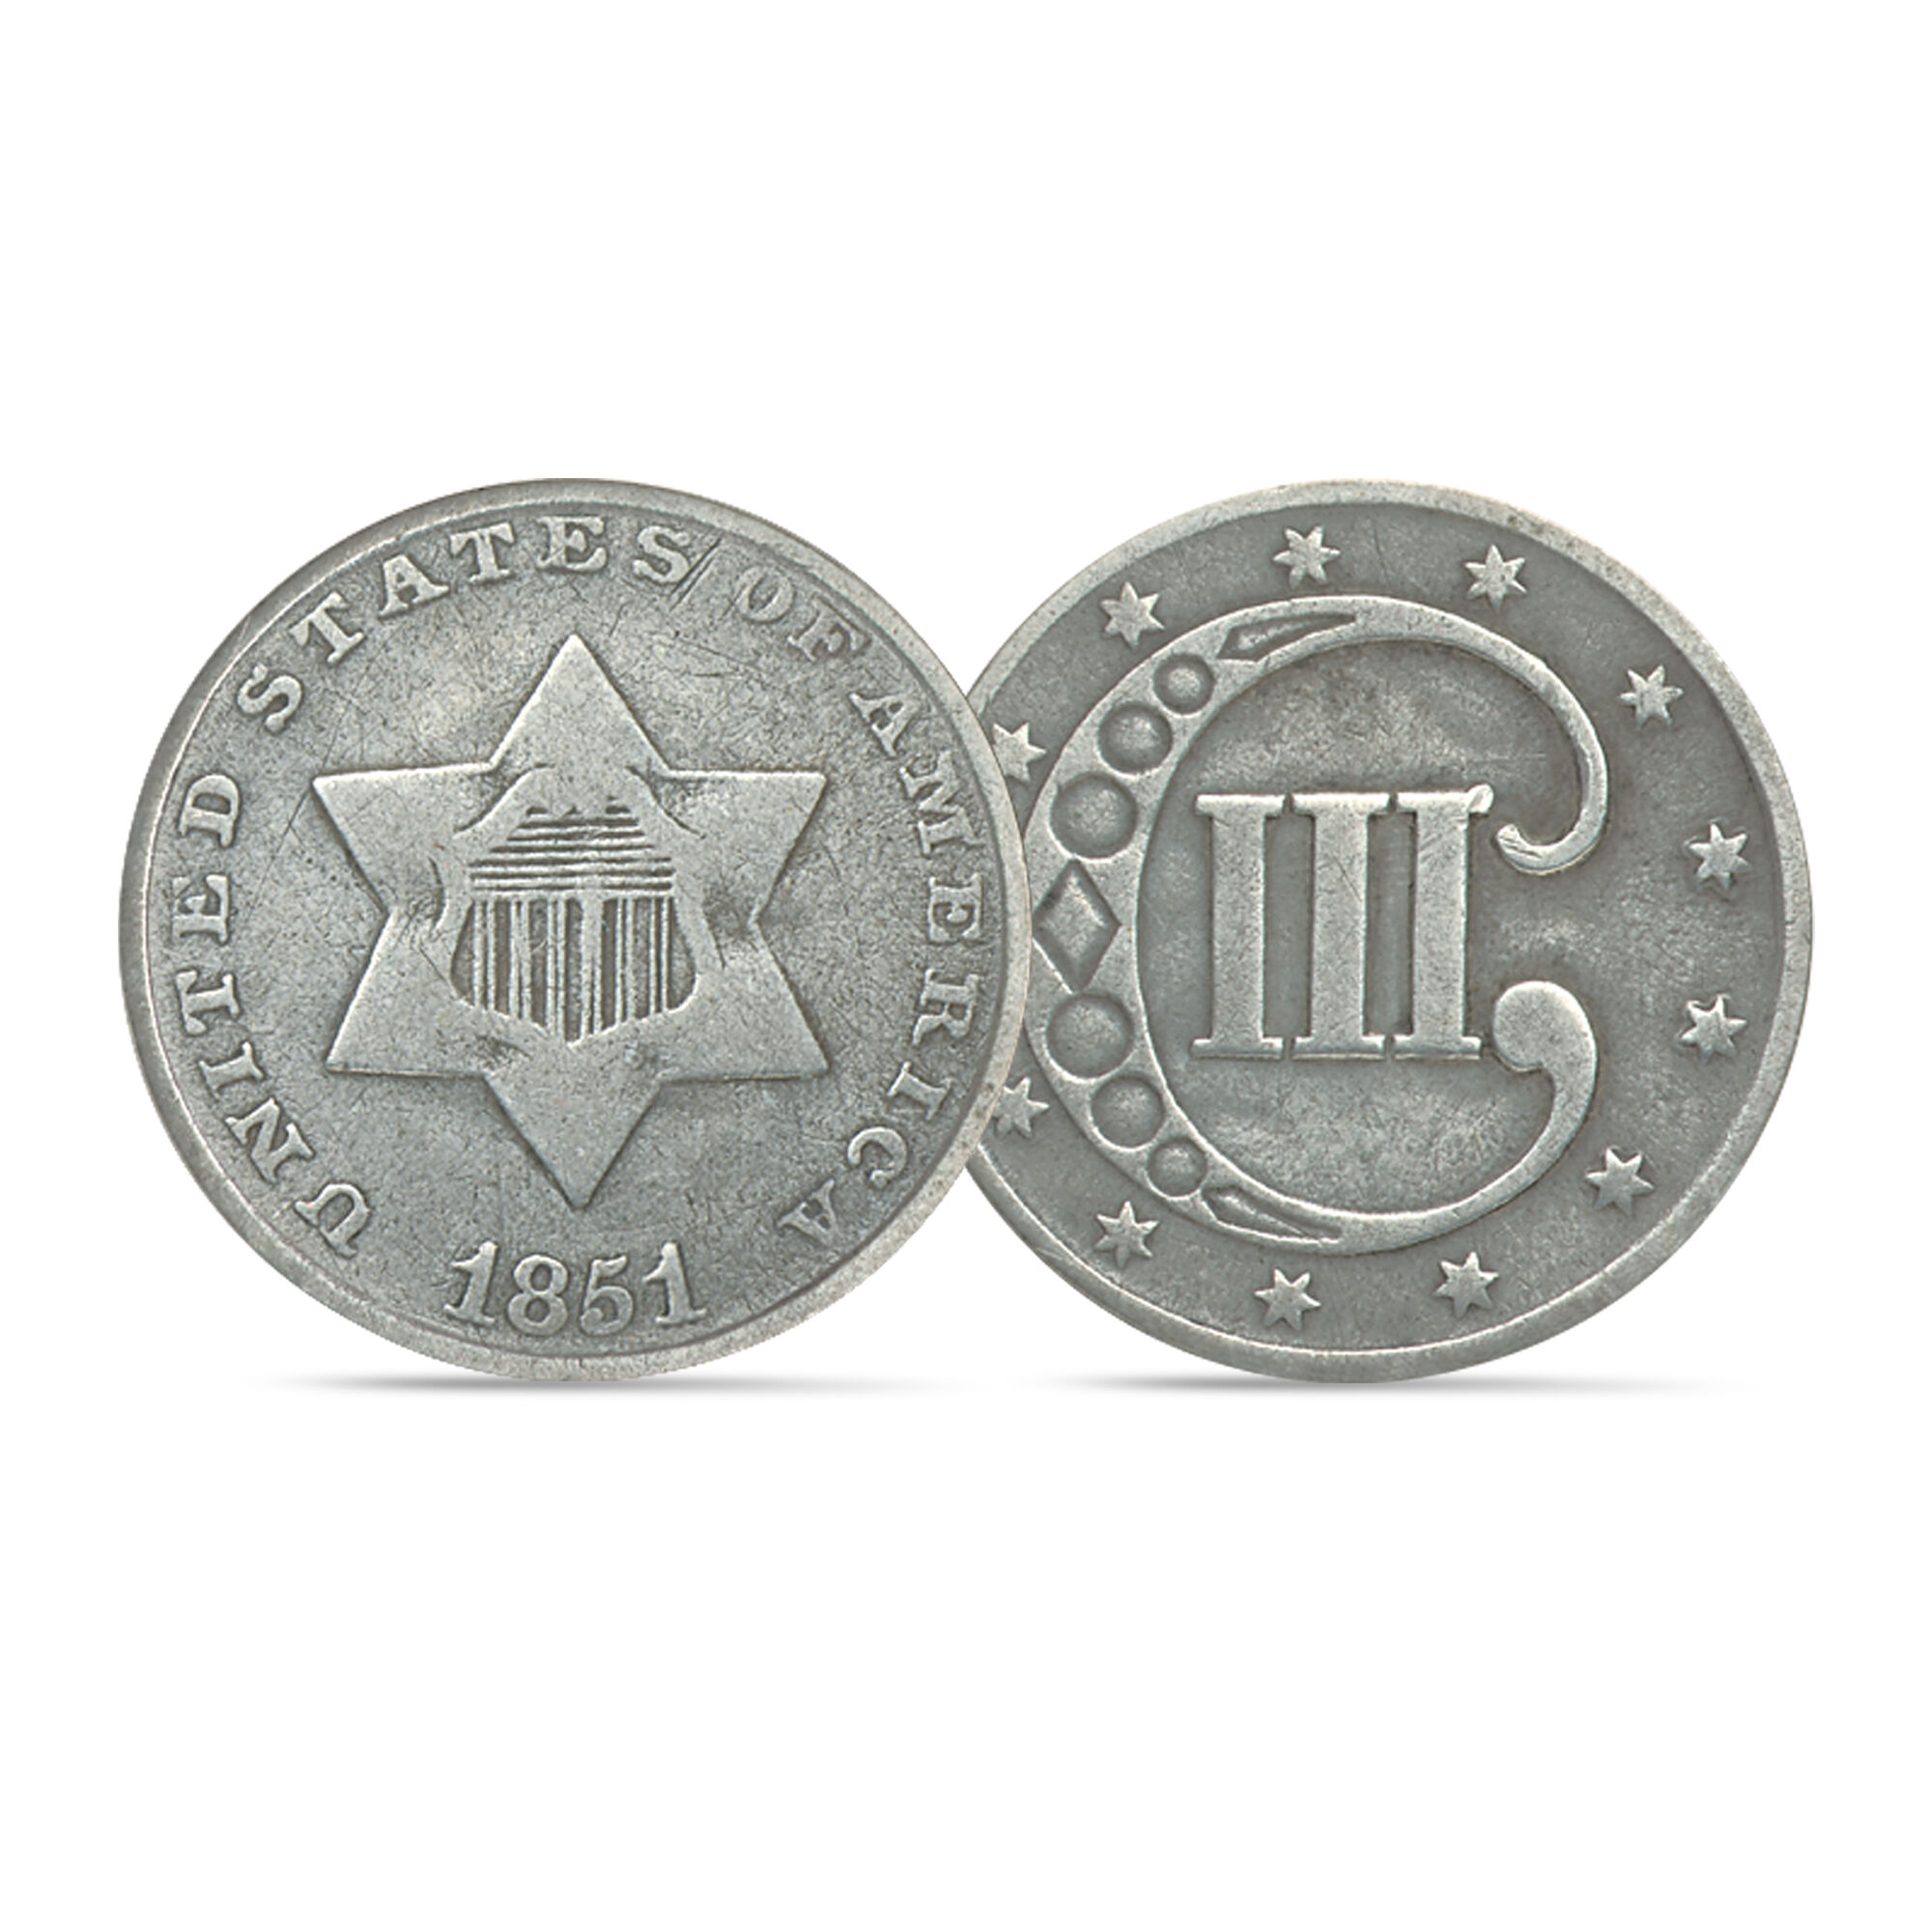 The Rare Cent Coin Collection 5218 0072 d coin